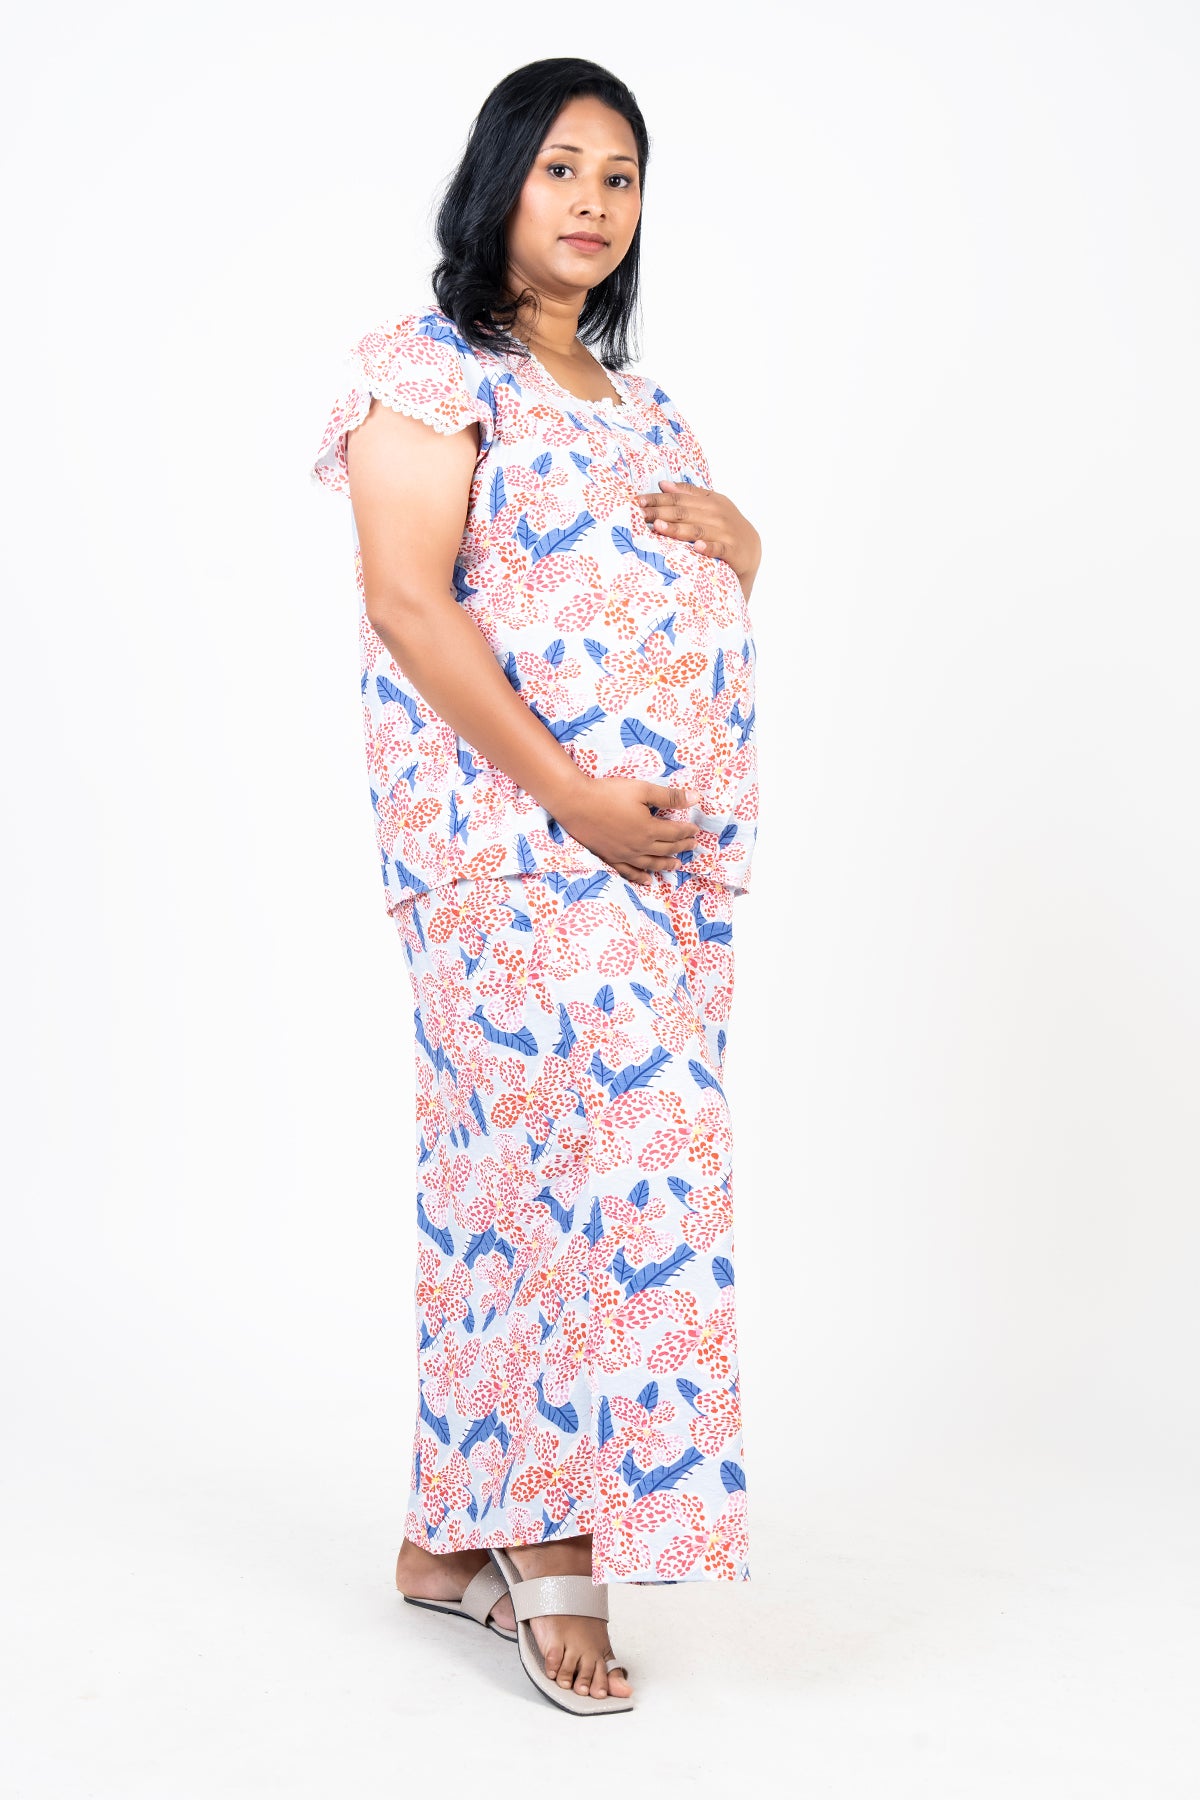 Envogue Women's Short Sleeve Printed Maternity Bed Jacket